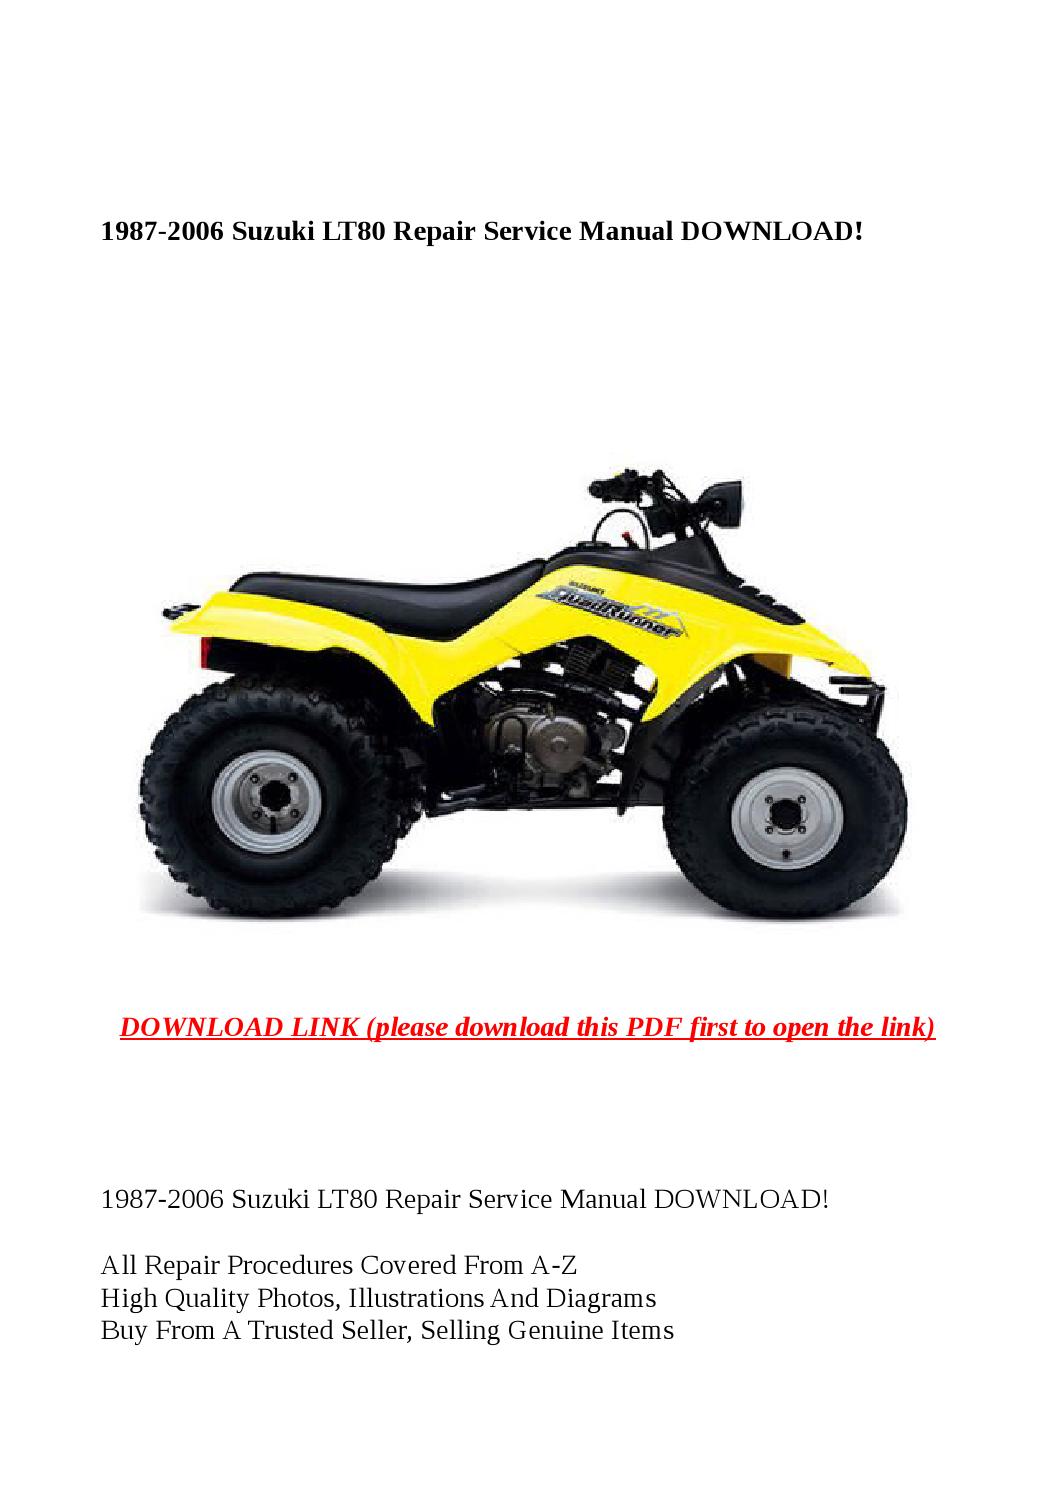 Suzuki Lt80 Service Manual Free Download - everyoung